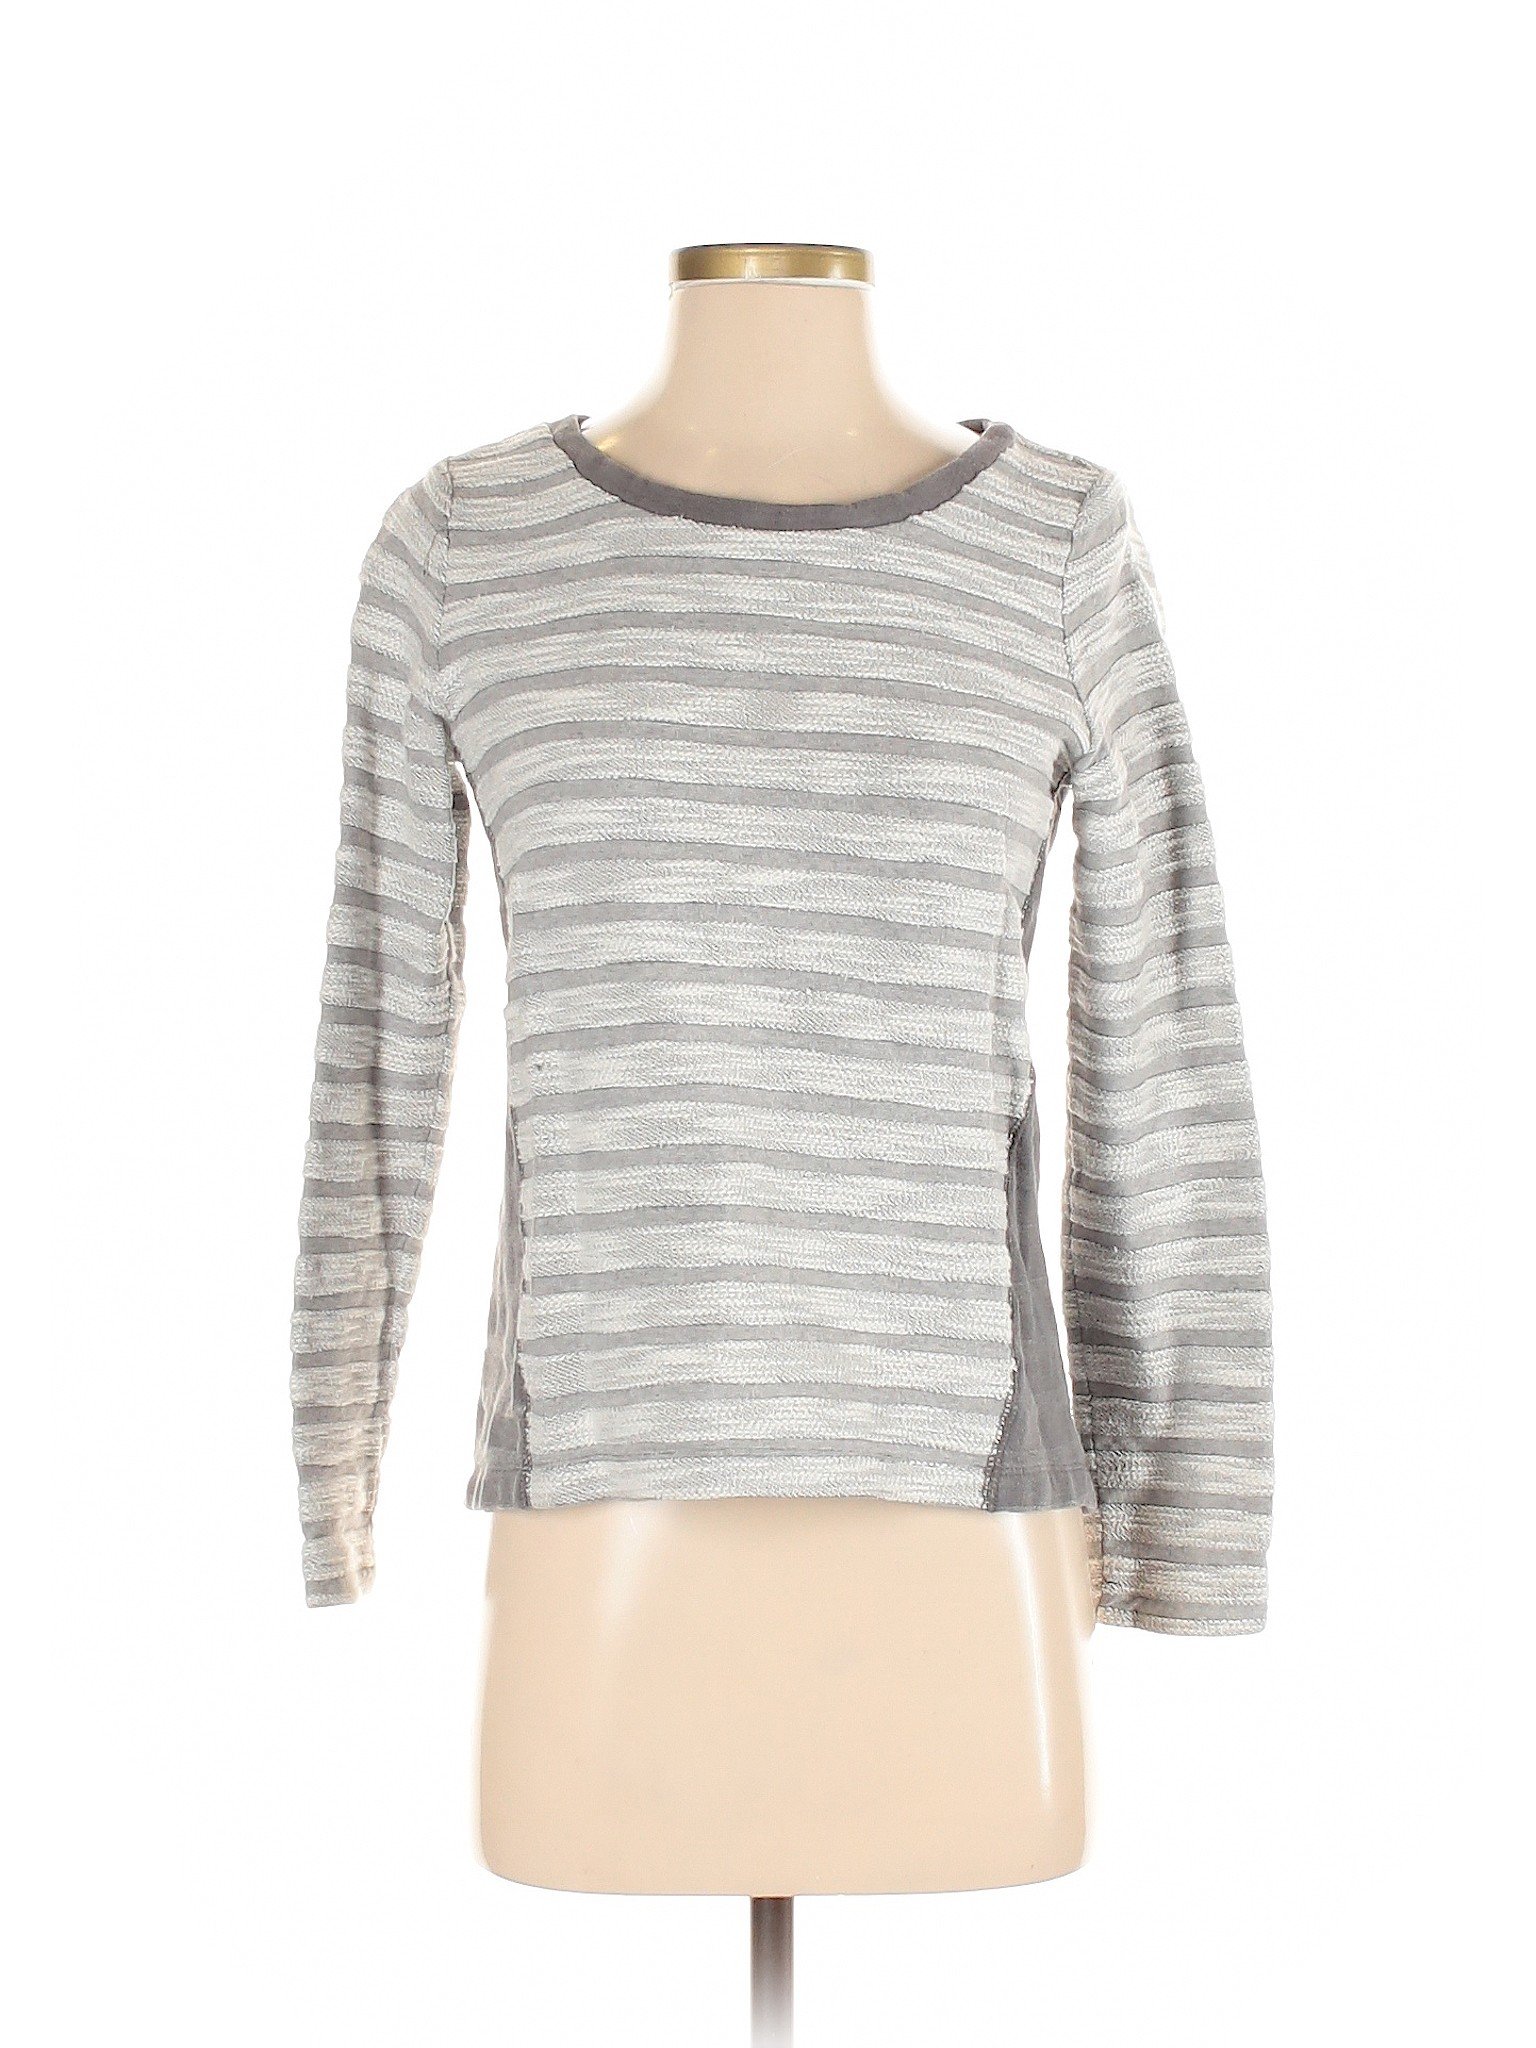 Gap Women Gray Sweatshirt XS | eBay